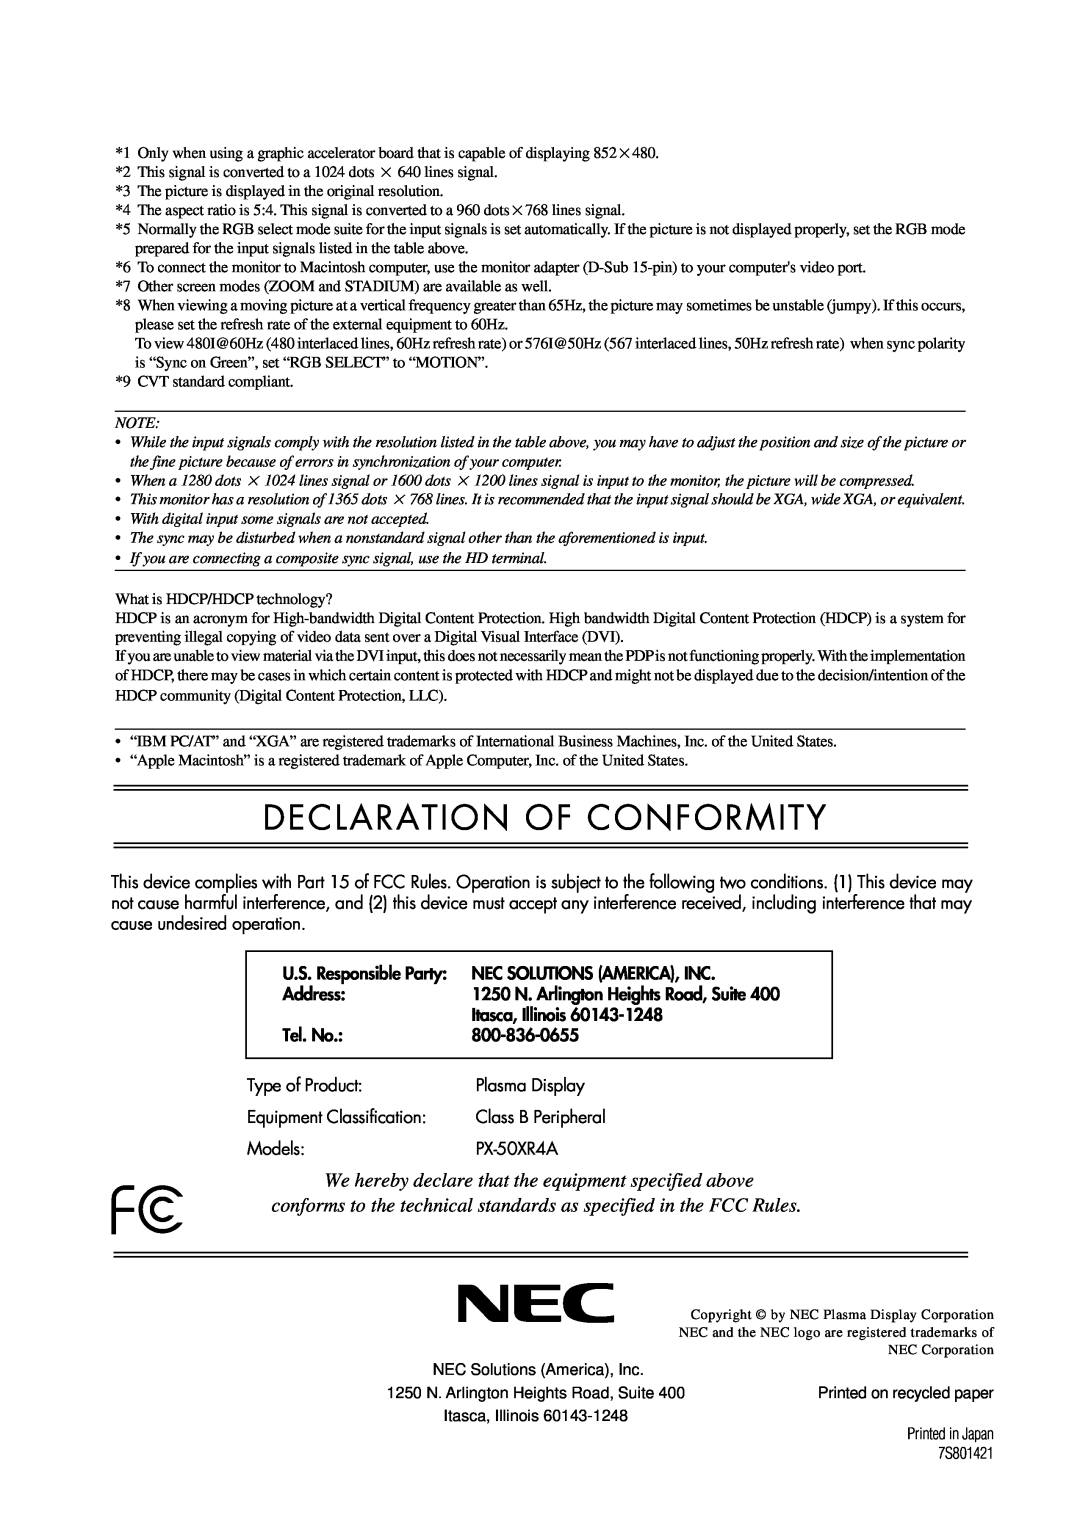 NEC PX-50XR4A operation manual Declaration Of Conformity 